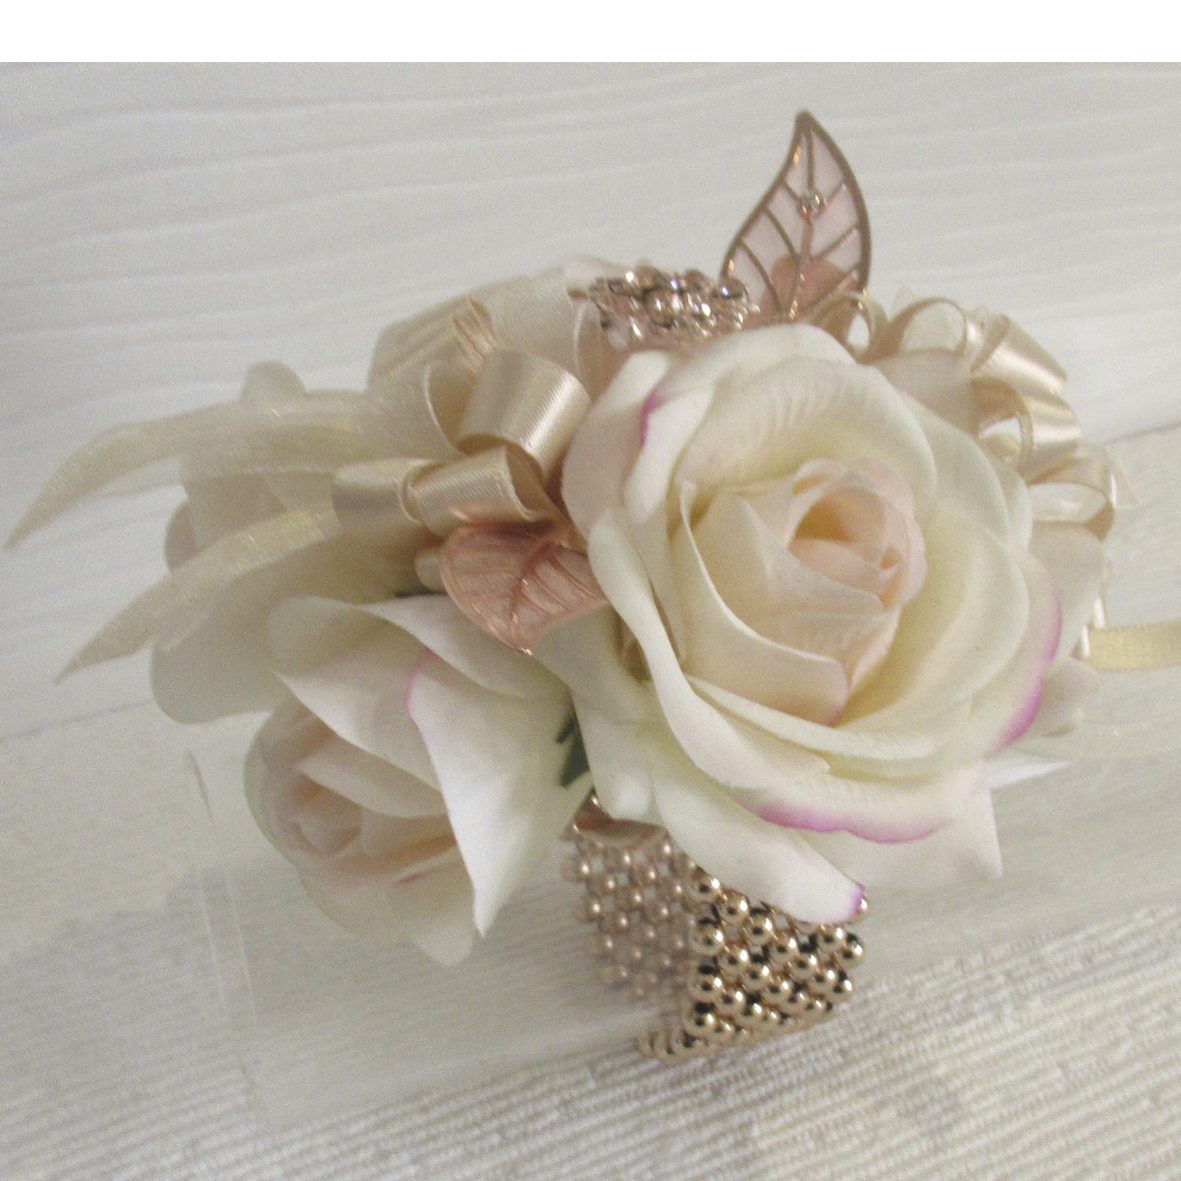 Blush Fresh Touch Roses & Rose Gold Wrist Corsage, blush & rose gold wrist corsage